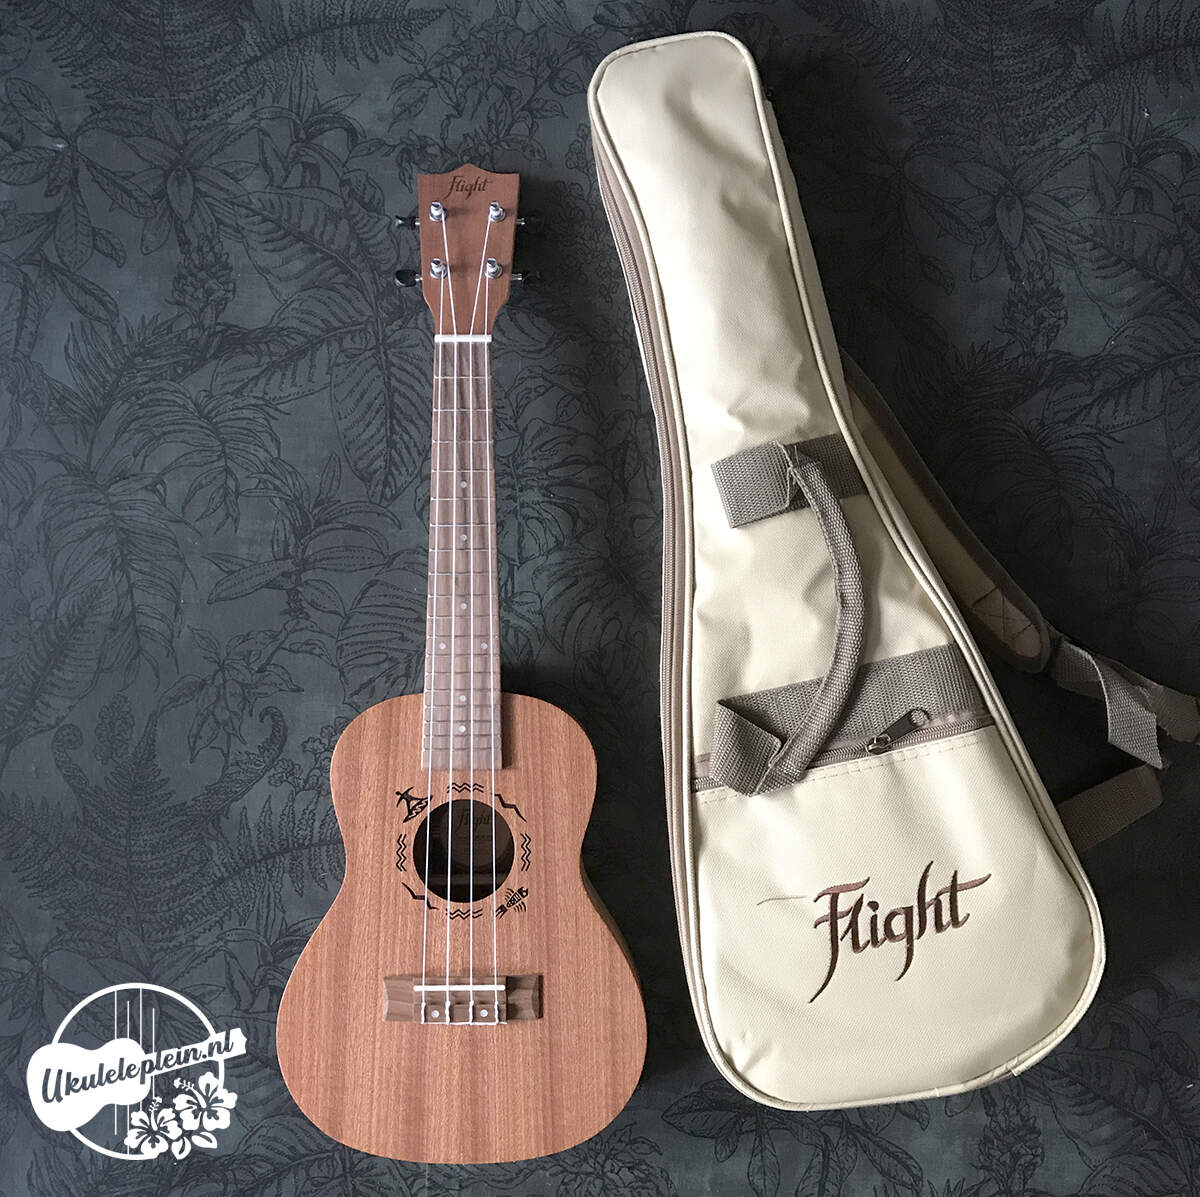 Flight NUC310 concert ukulele